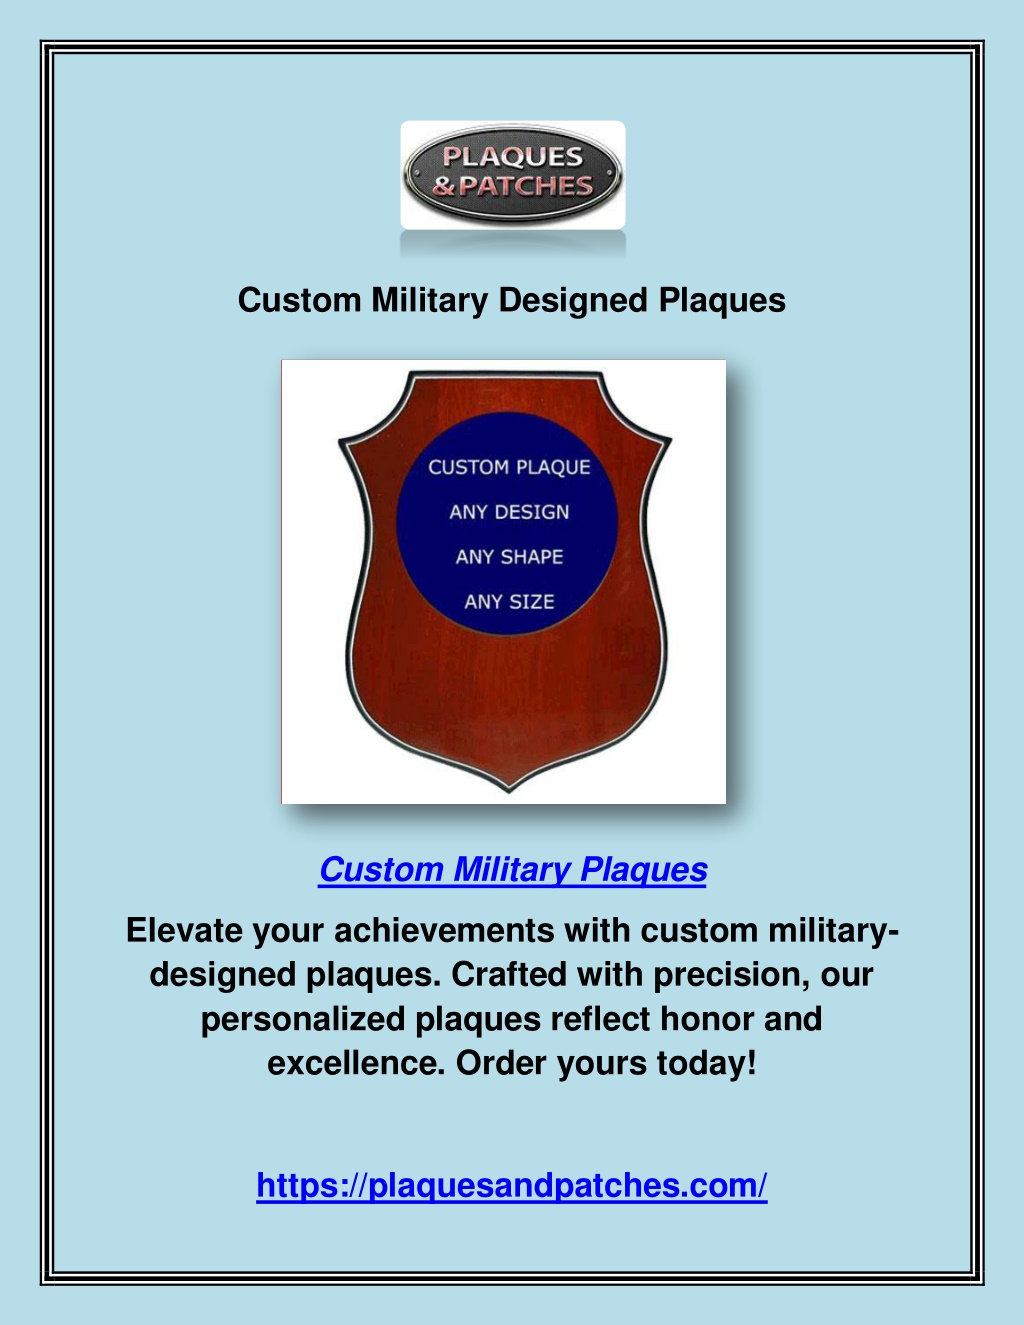 custom military designed plaques l.w